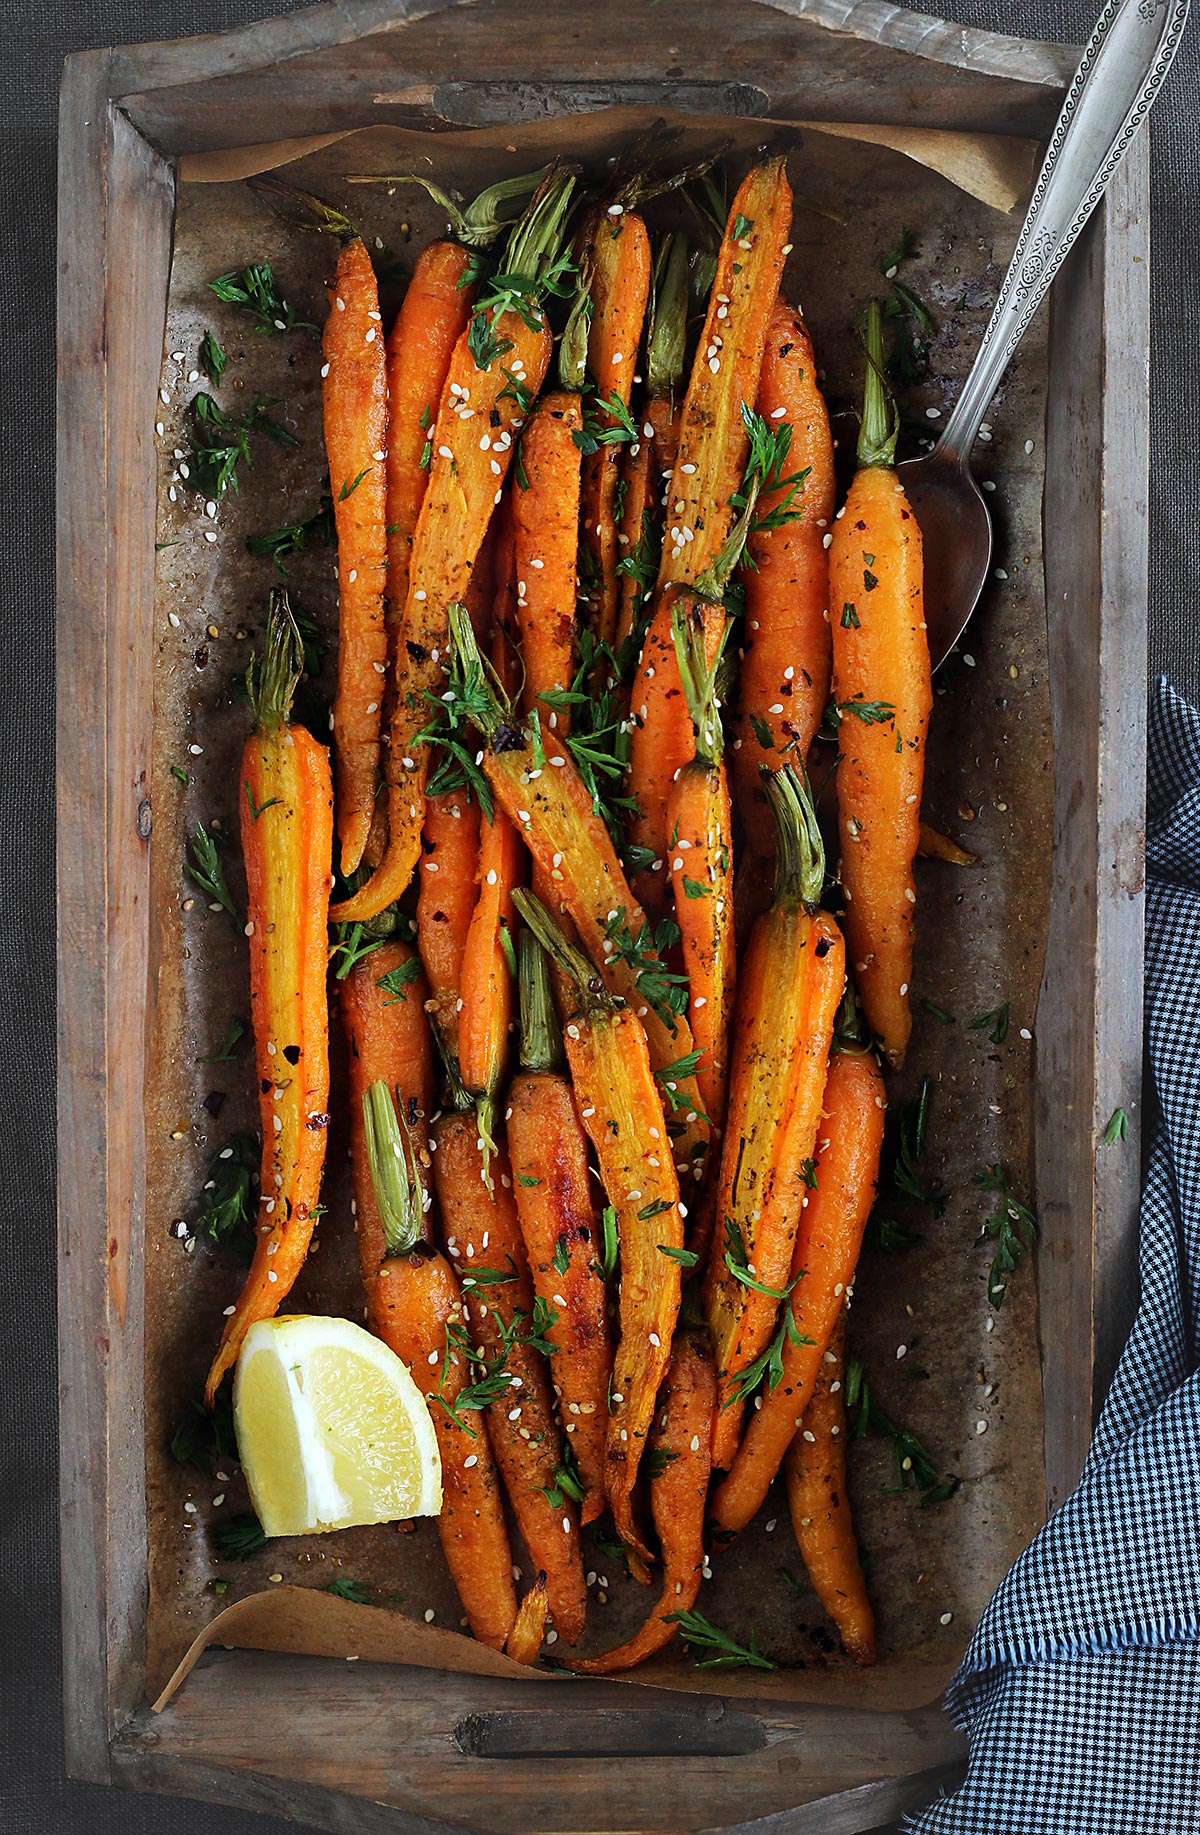 Roasted carrots in baking tray